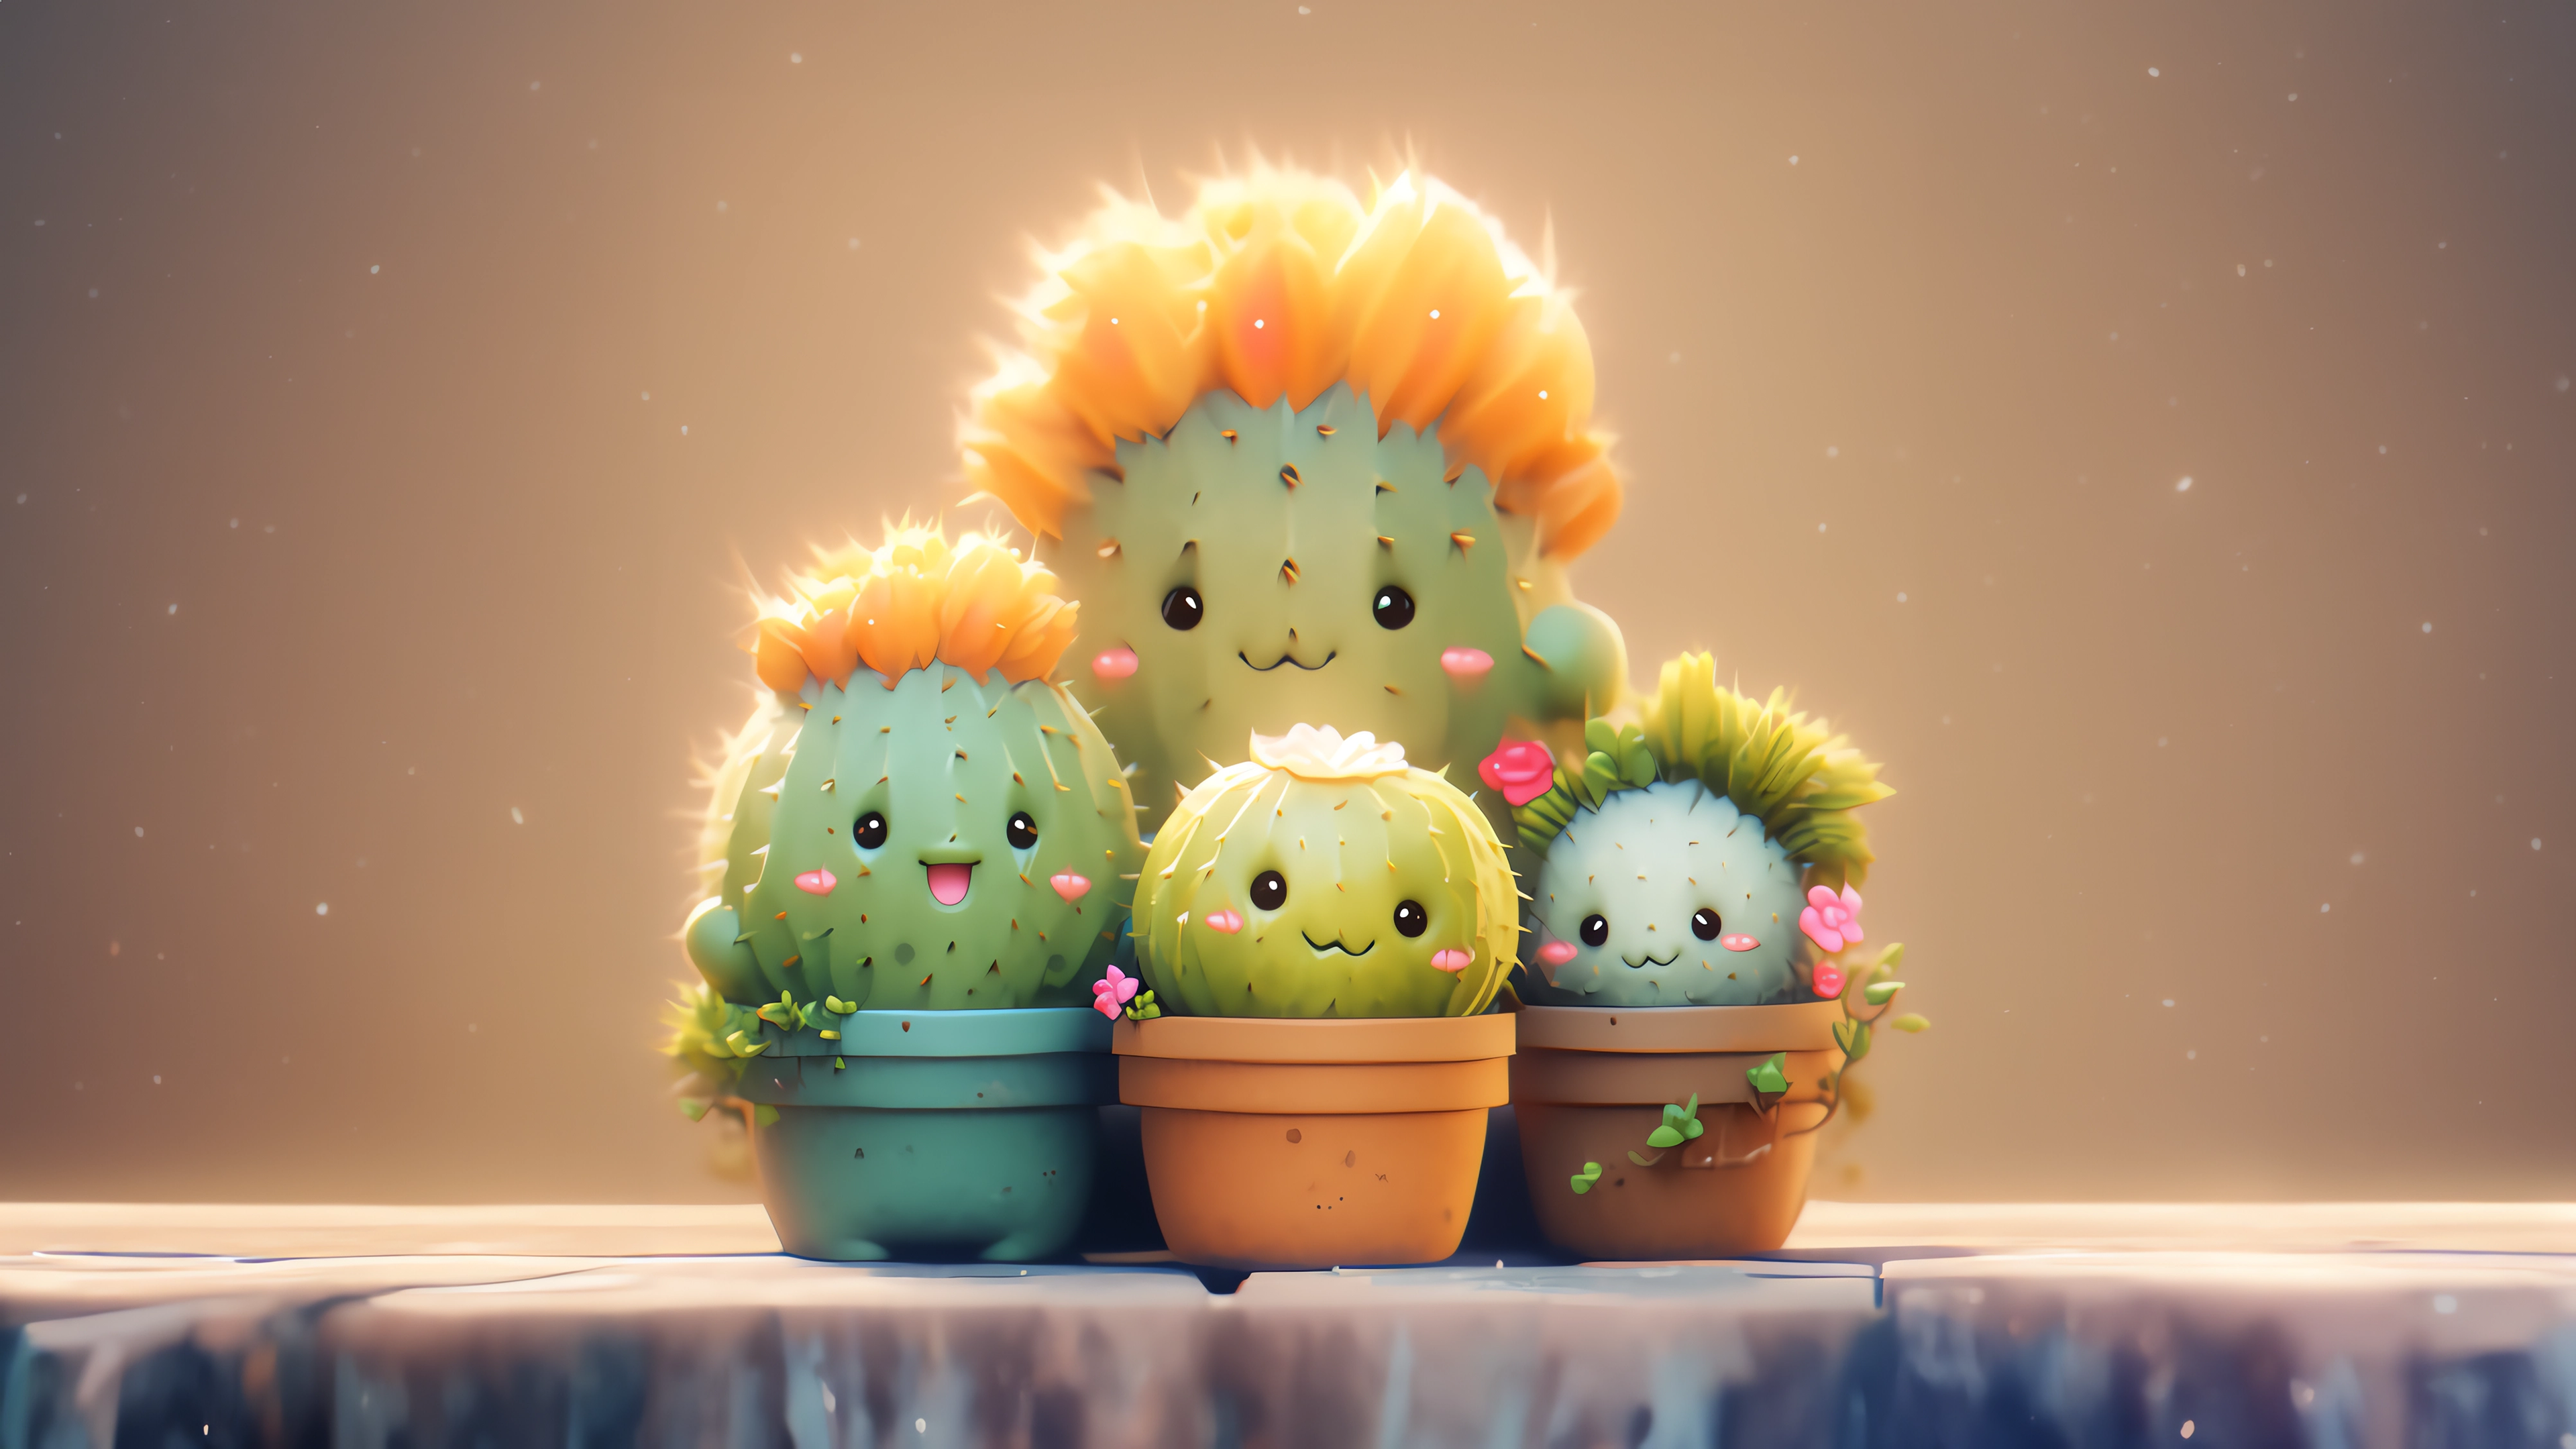 Kawaii Baby Cactus 4K Wallpaper for PC